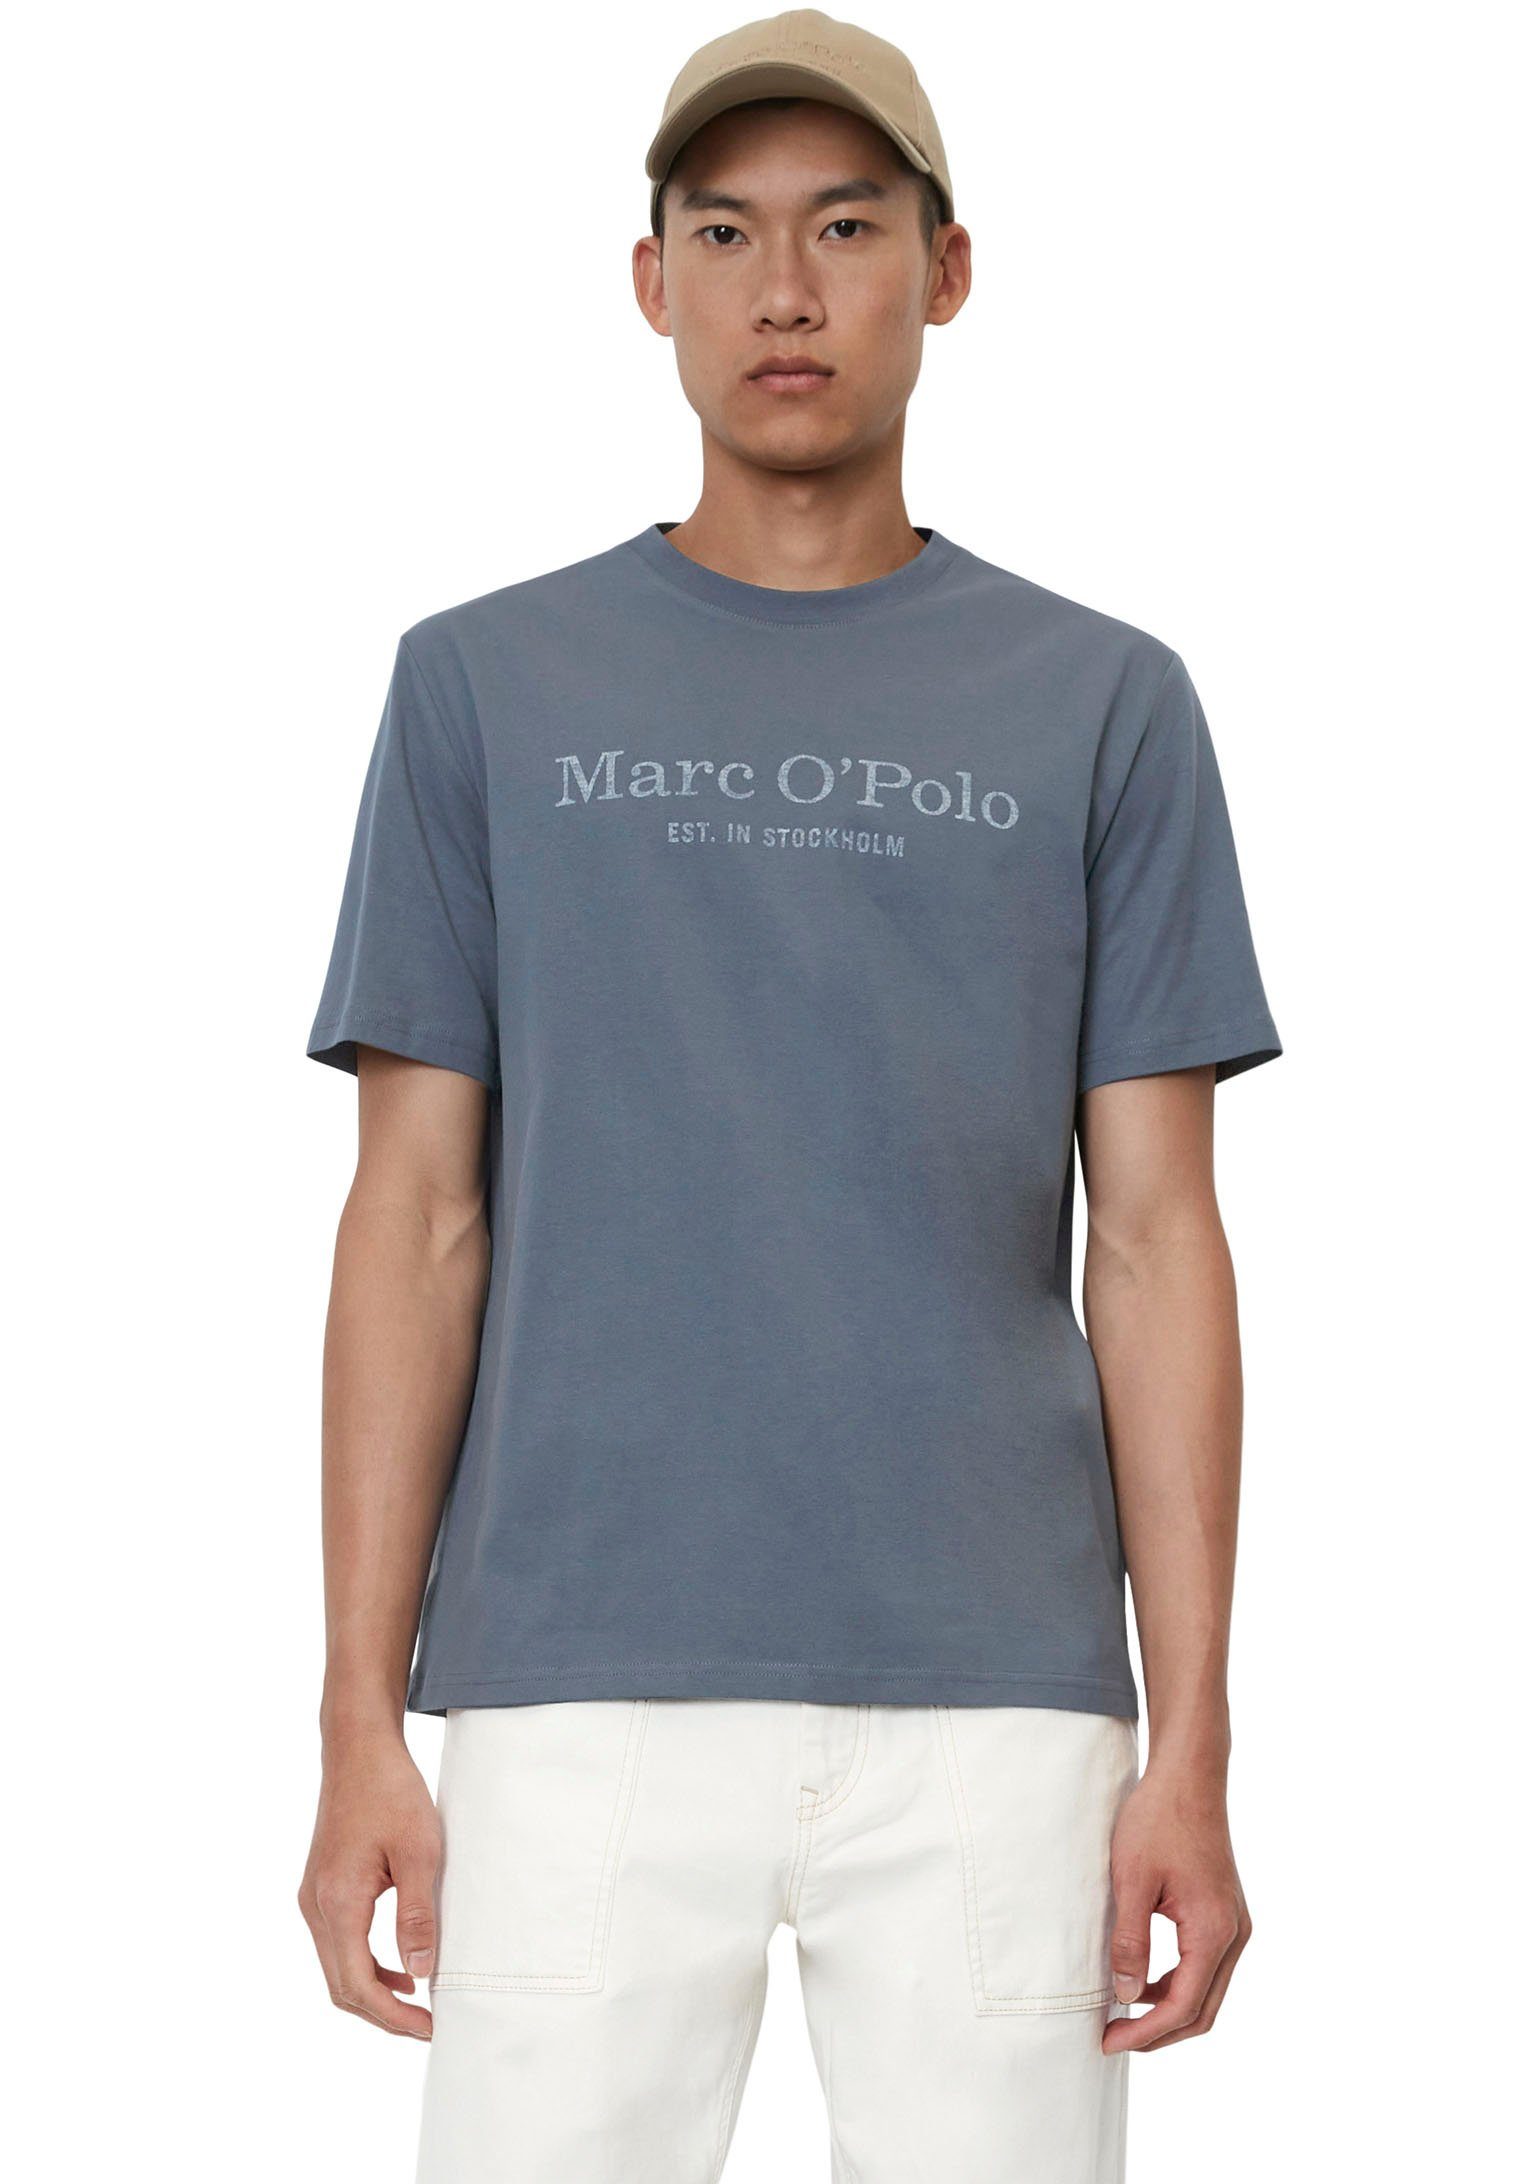 Marc dunkelgrau O'Polo T-Shirt